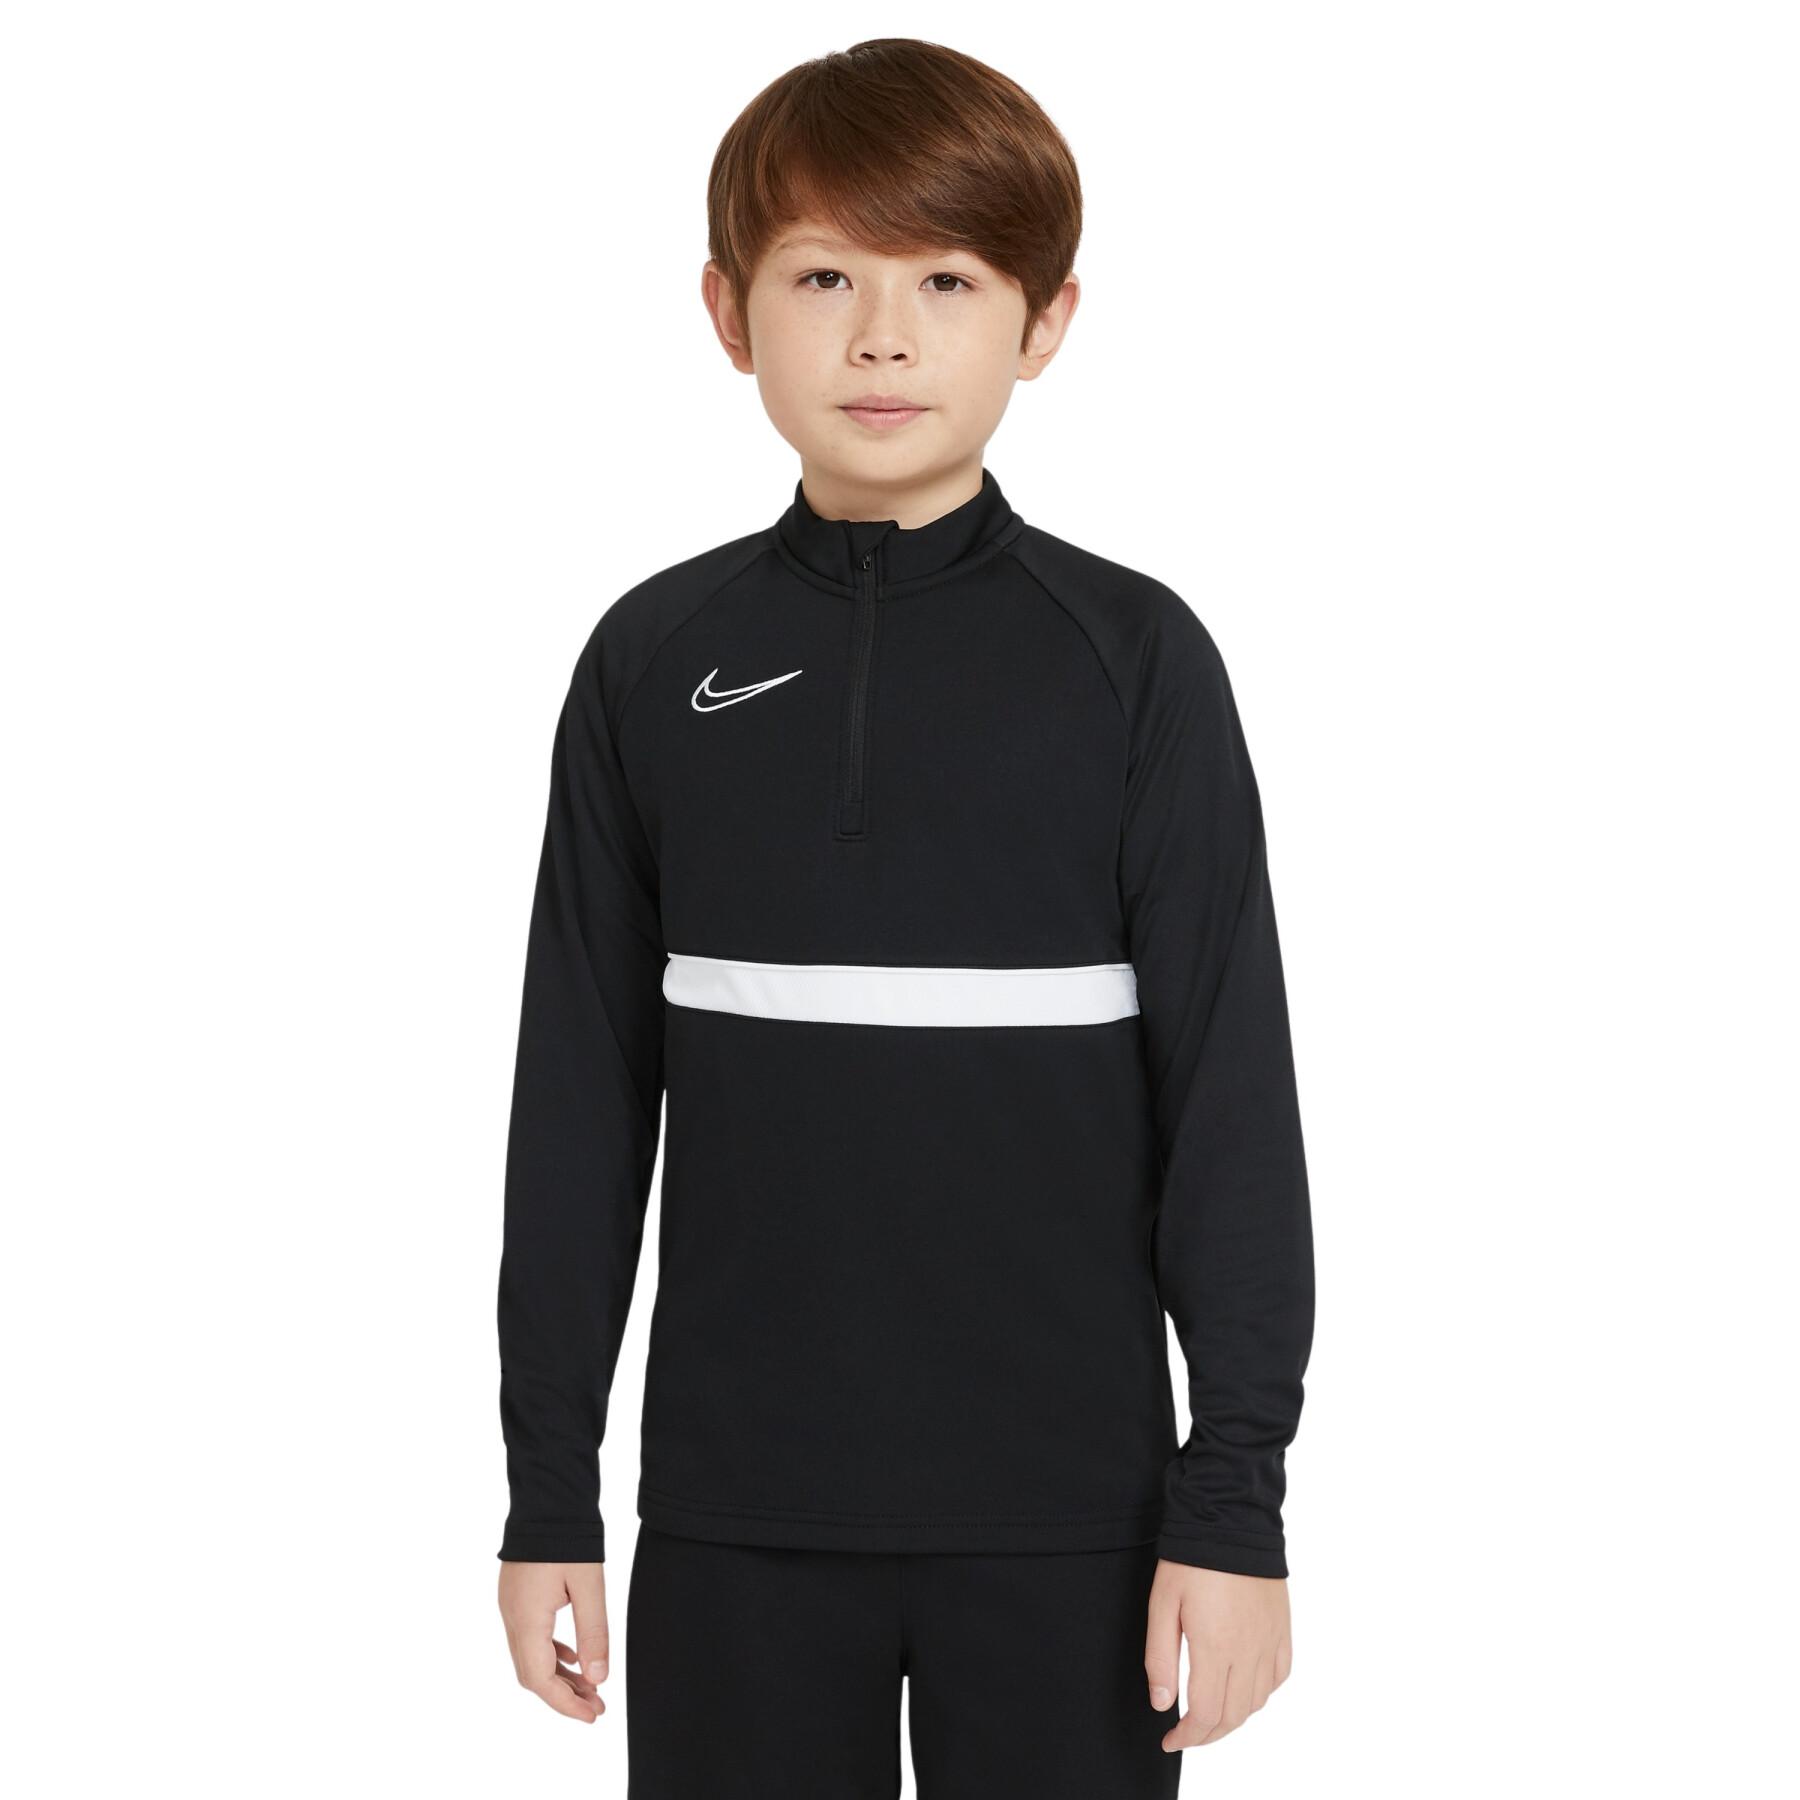 Kid's jersey Nike Dri-FIT Academy